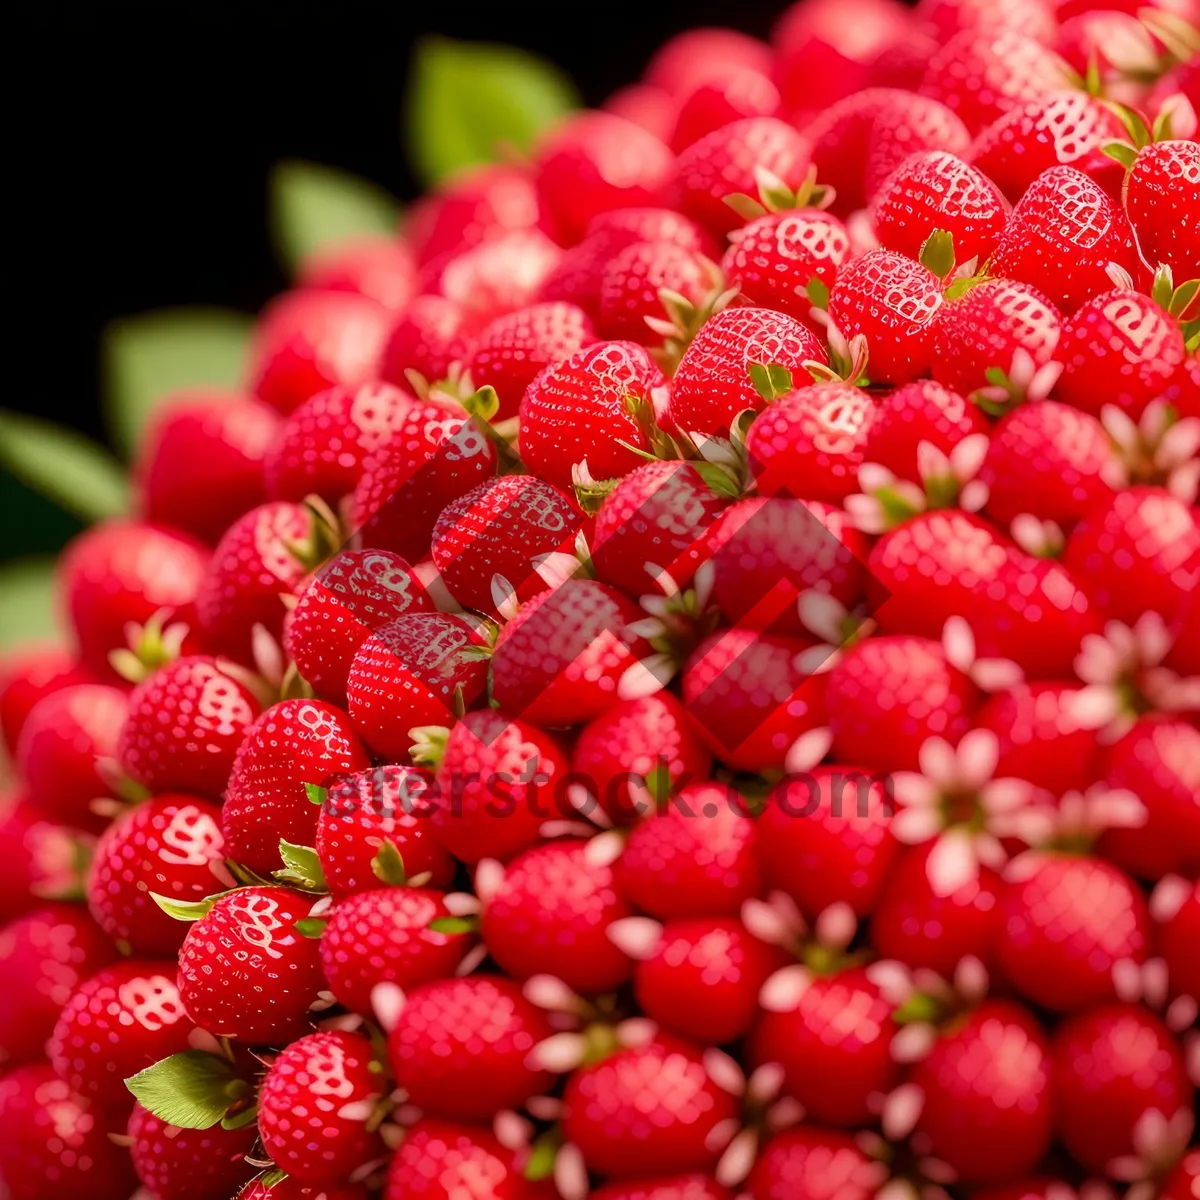 Picture of Juicy Summer Berries: A Burst of Sweetness